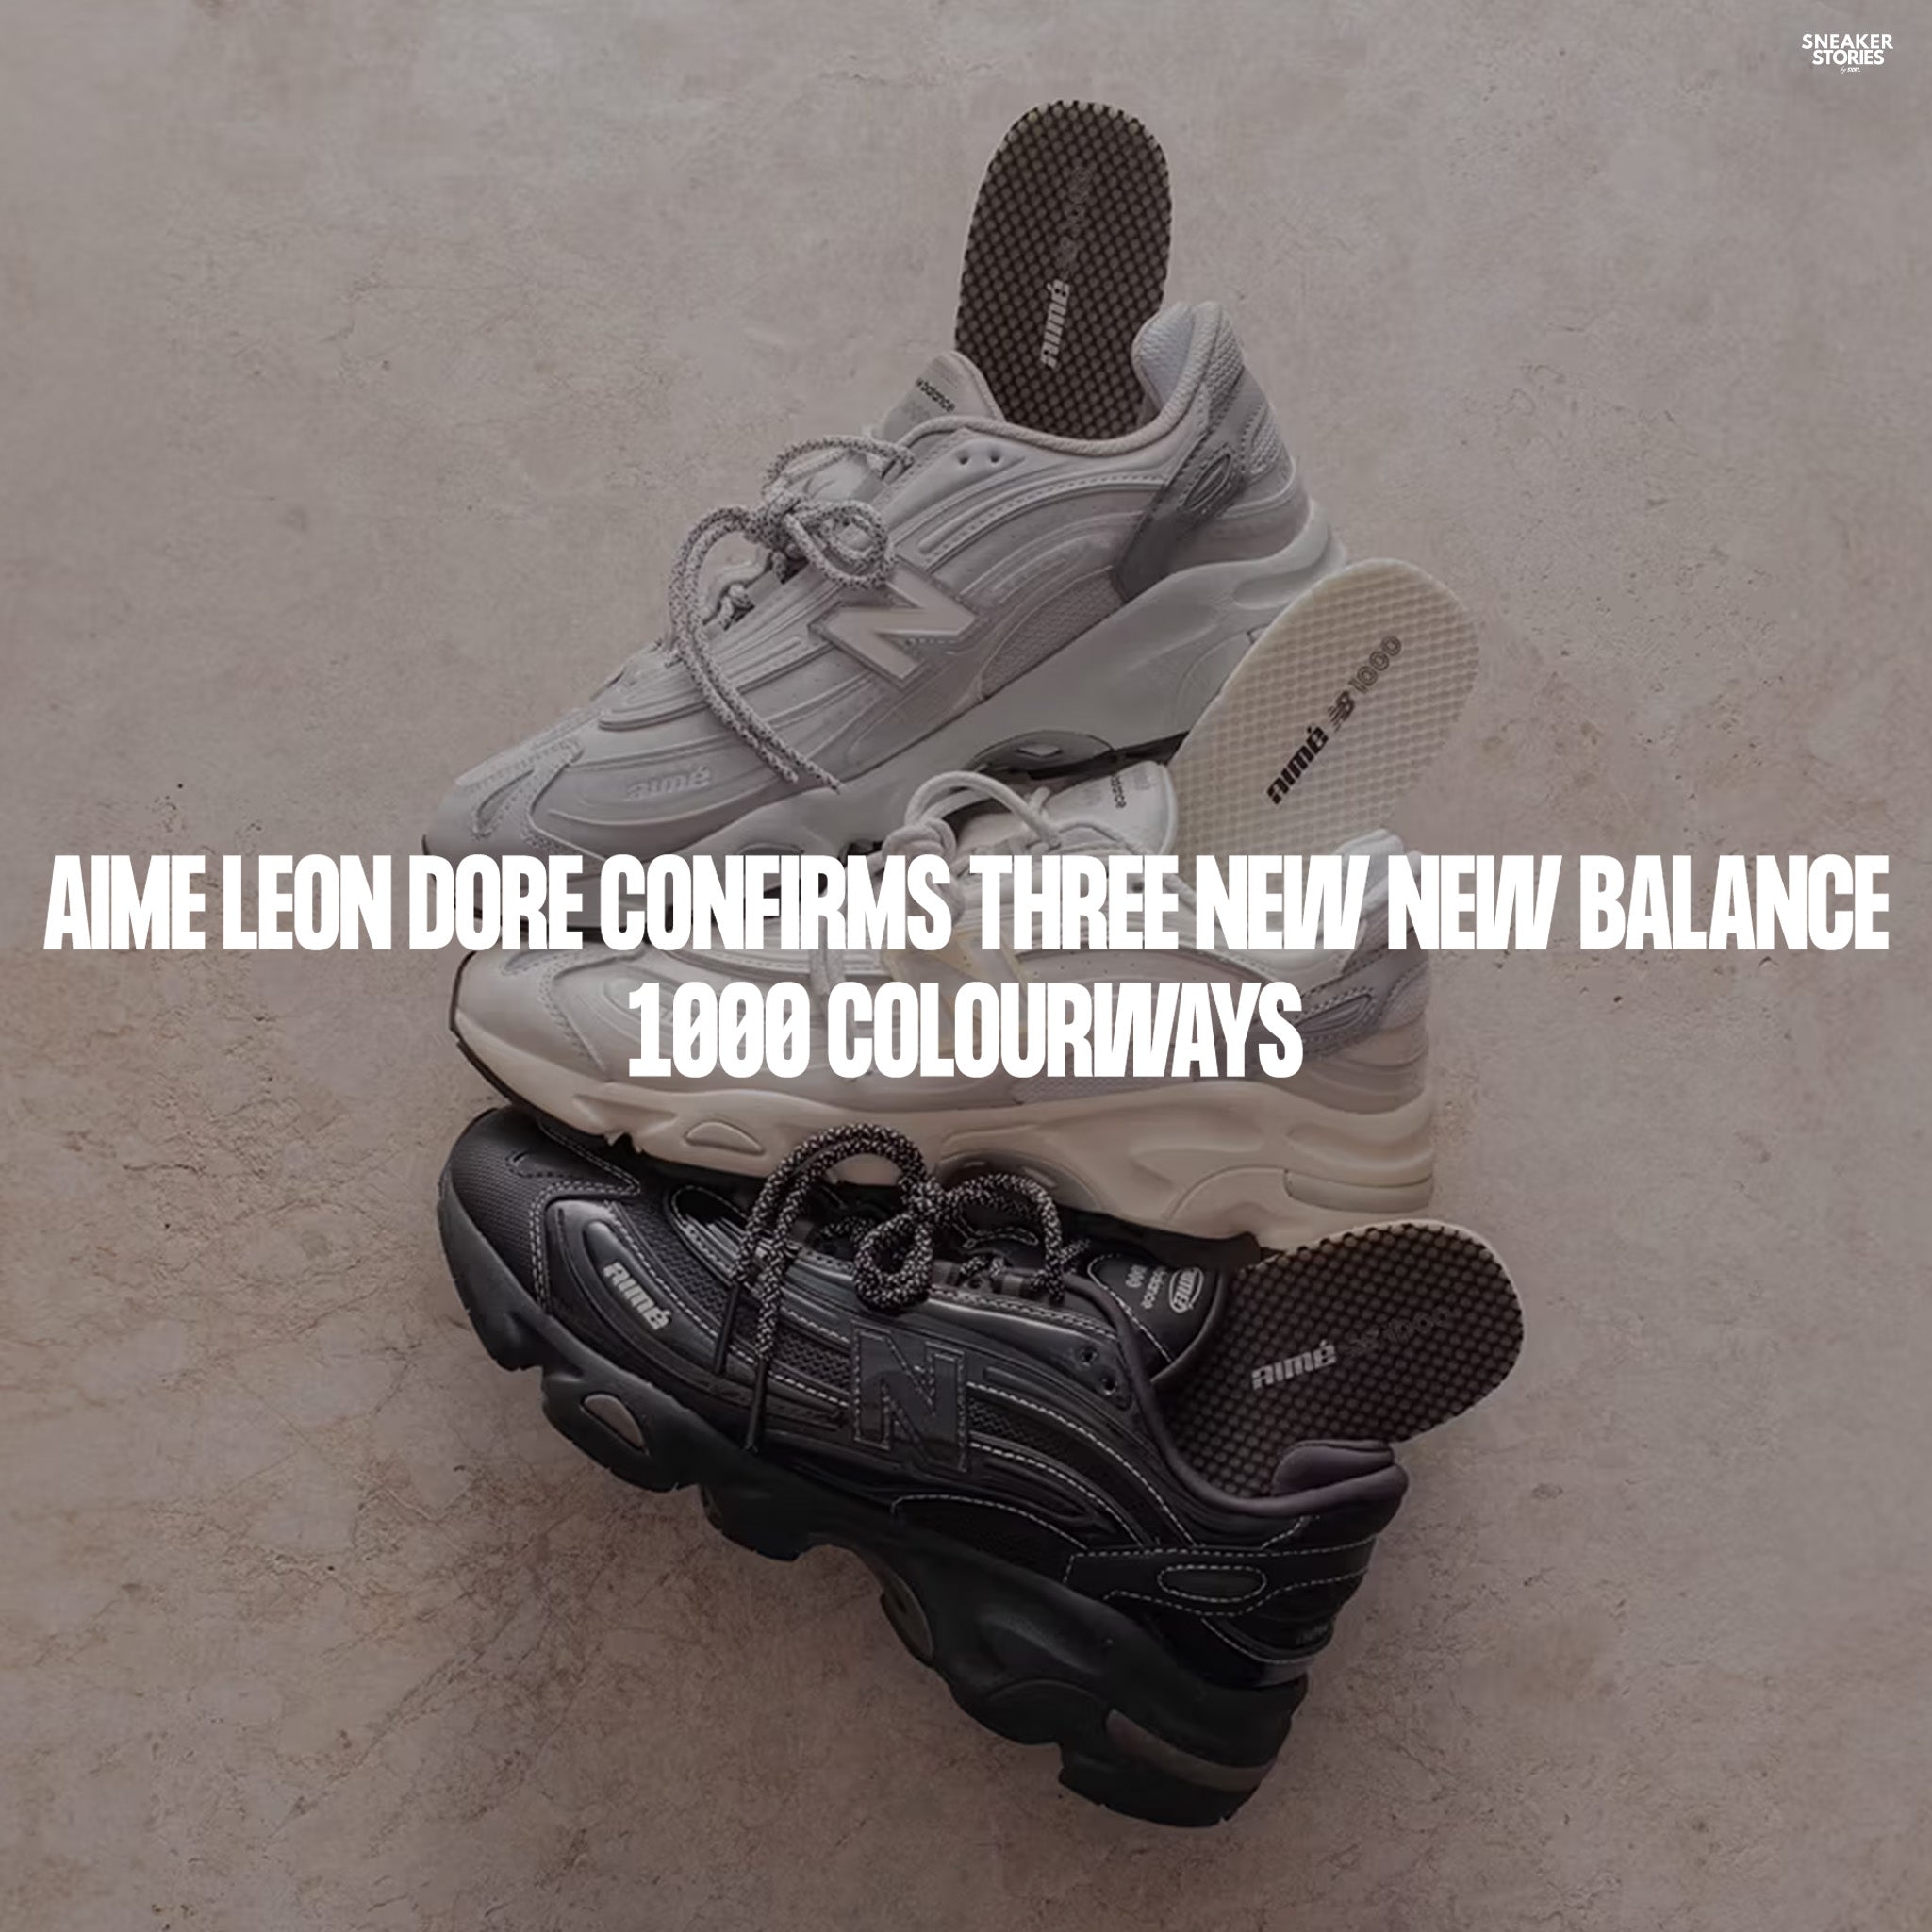 Aime Leon Dore confirms three new New Balance 1000 colourways